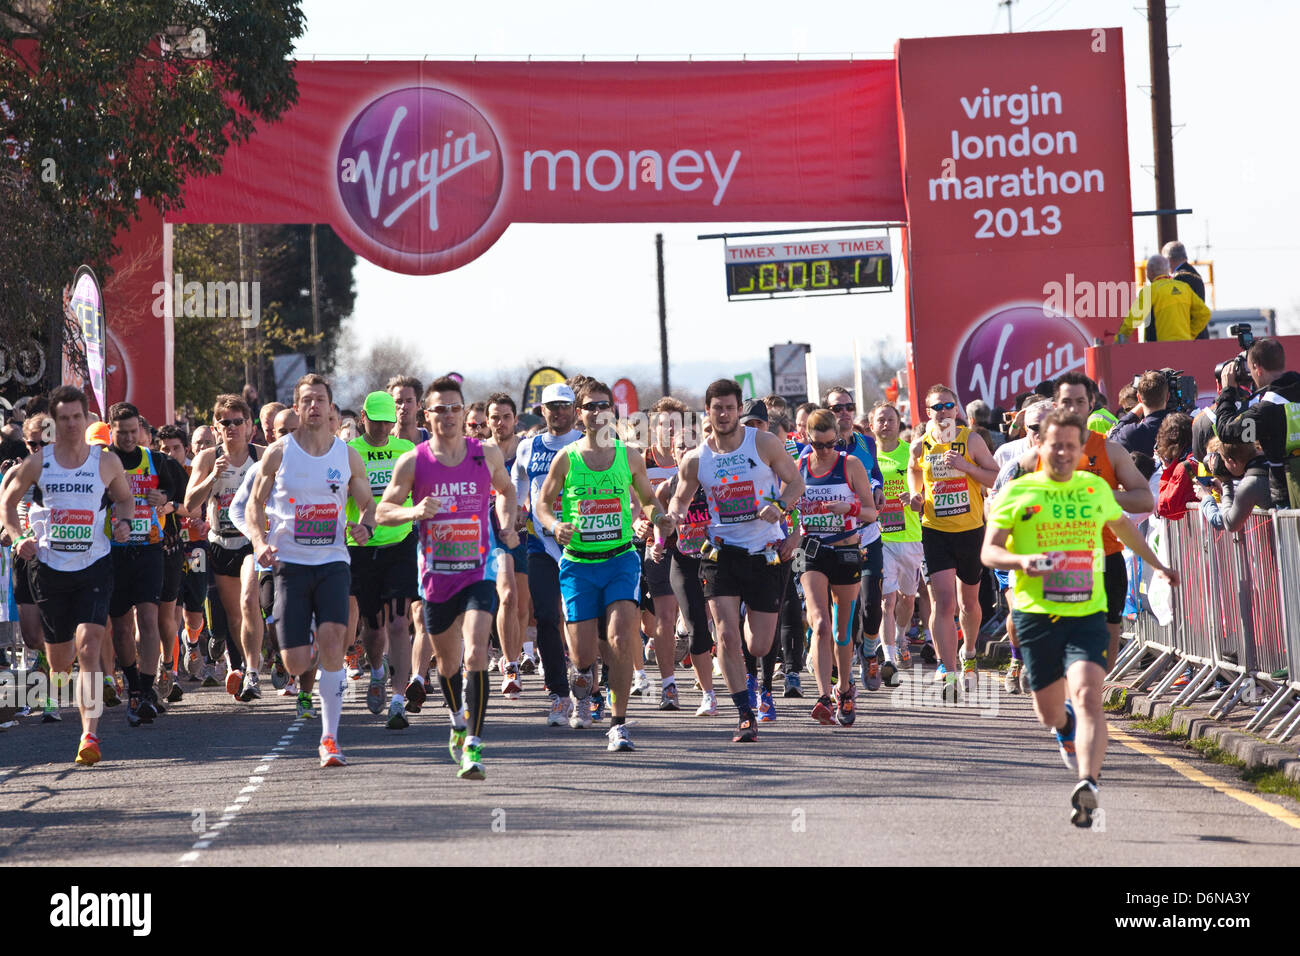 Virgin London Marathon 2013, St Johns Park, Blackheath, London, UK 21. April 20113 Läufer zum Jahresbeginn die grüne Start bei den Virgin London Marathon 2013 verlassen. Stockfoto